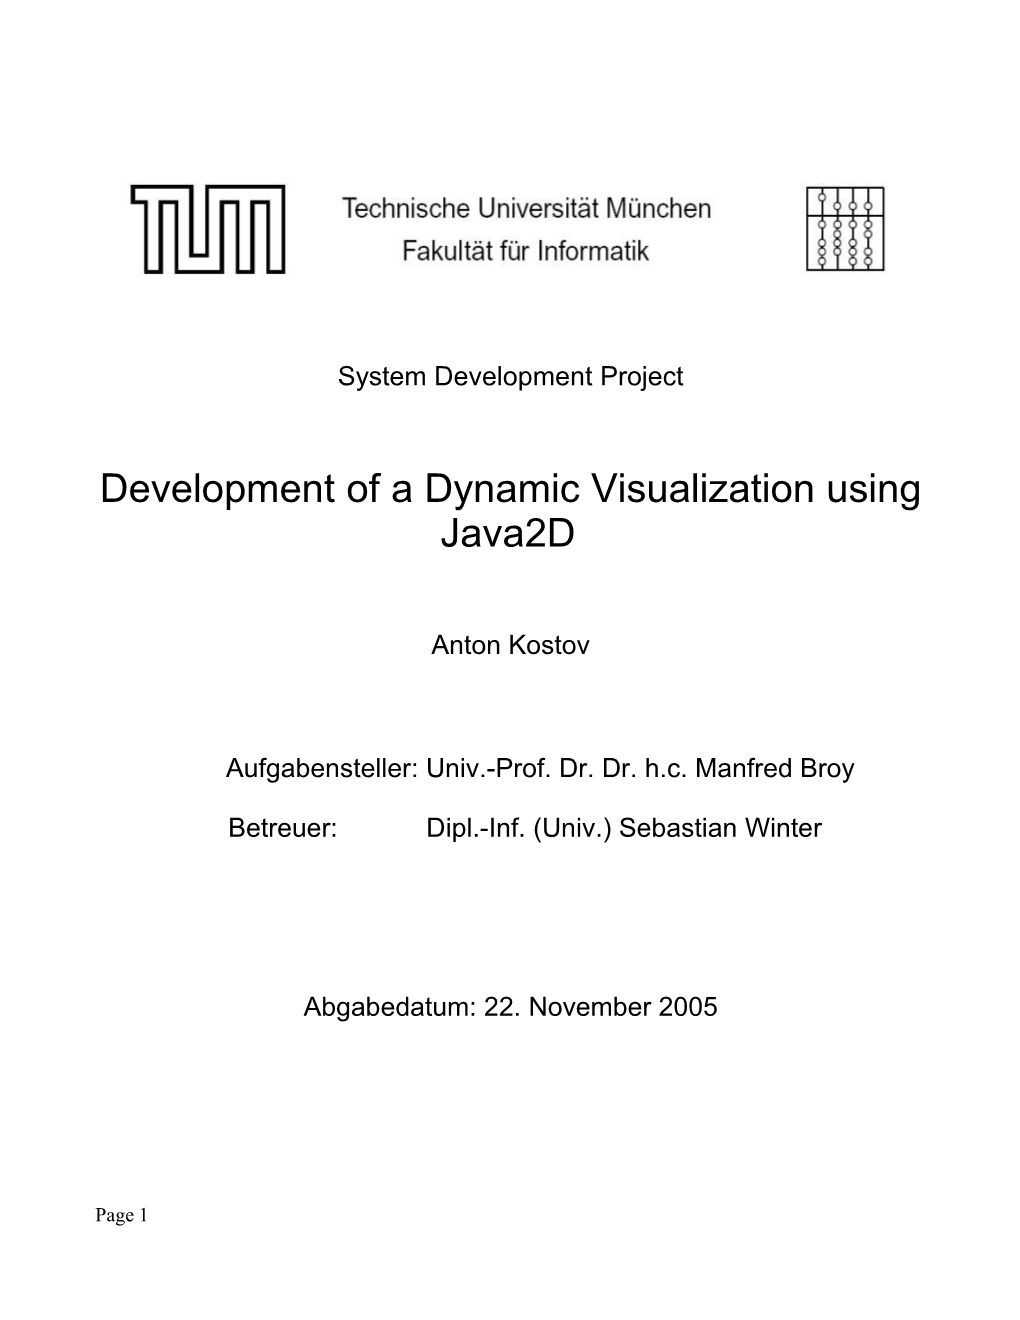 Development of a Dynamic Visualization Using Java2d